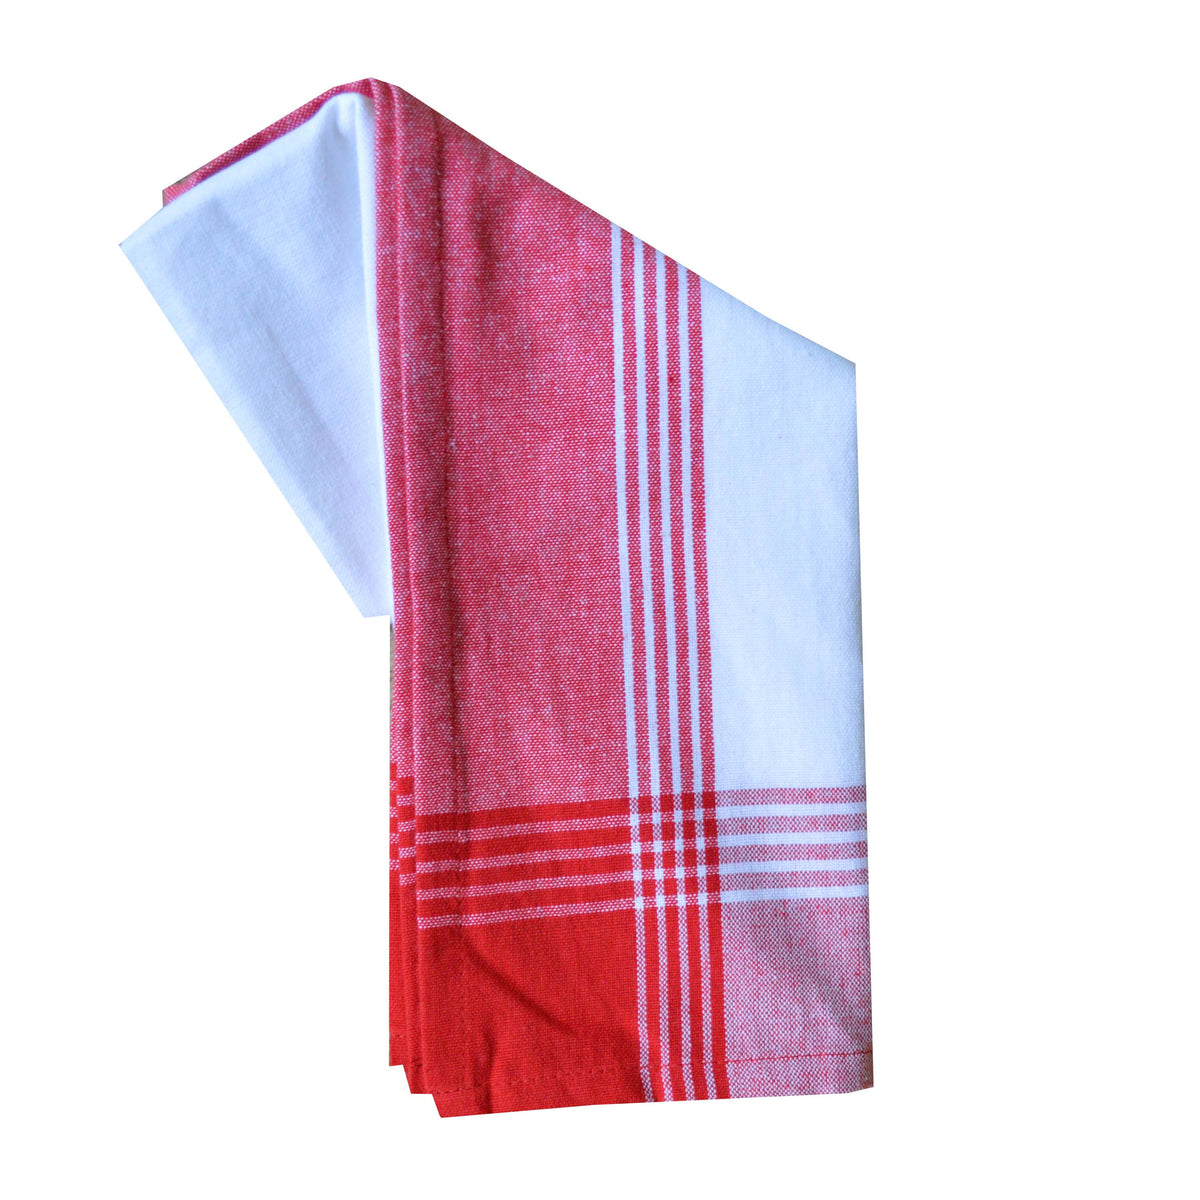 Variety Towel Set - Bright Red Set of 4